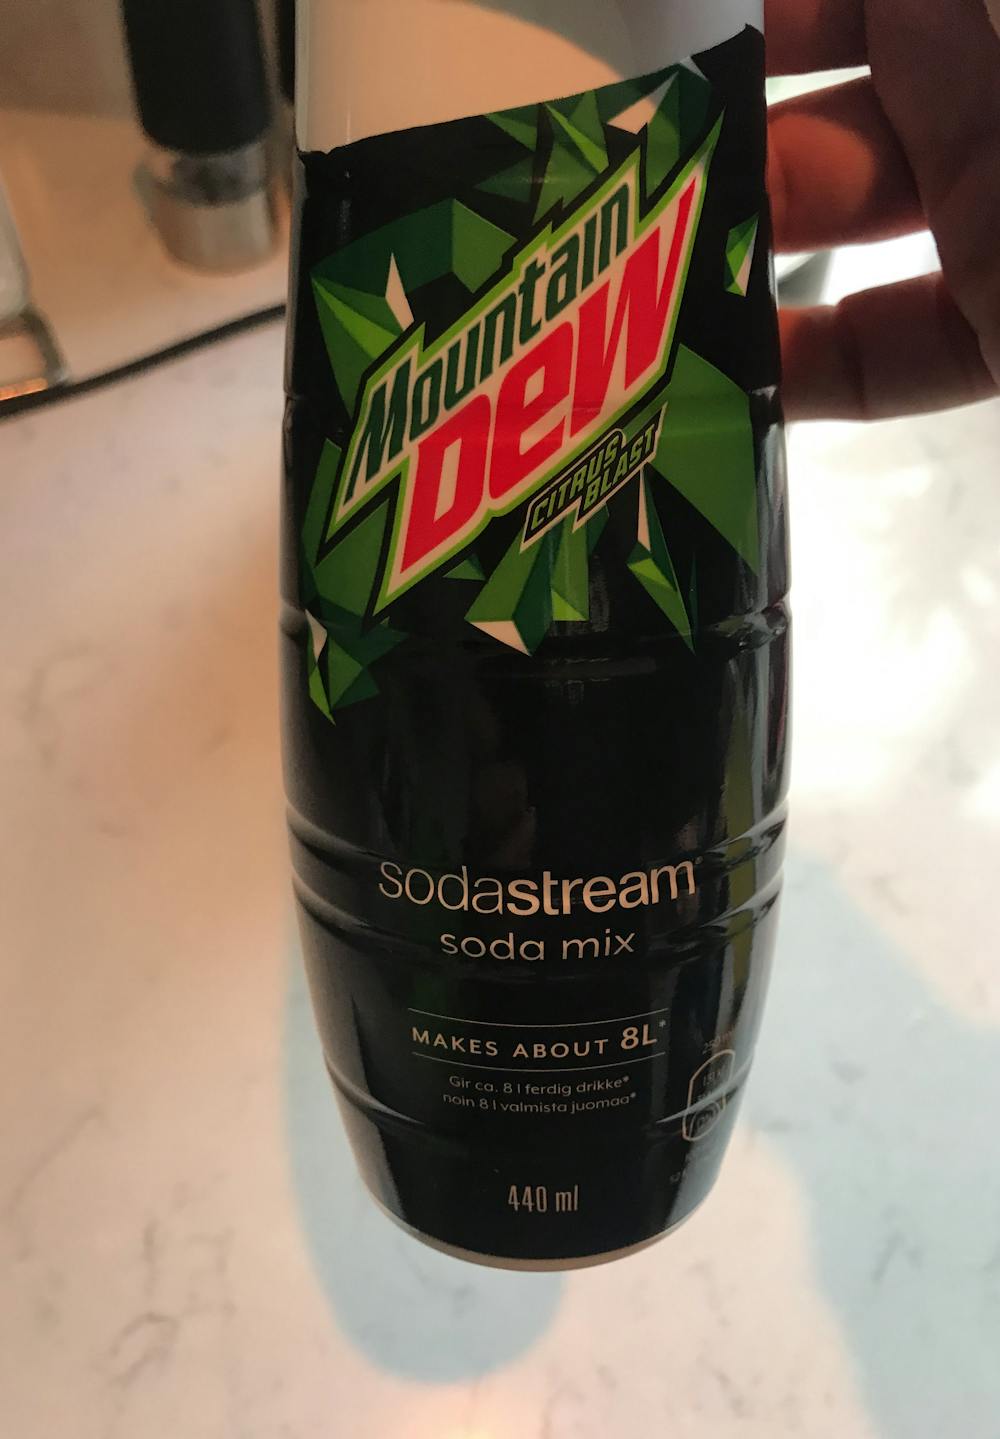 Mountain dew, Sodastream